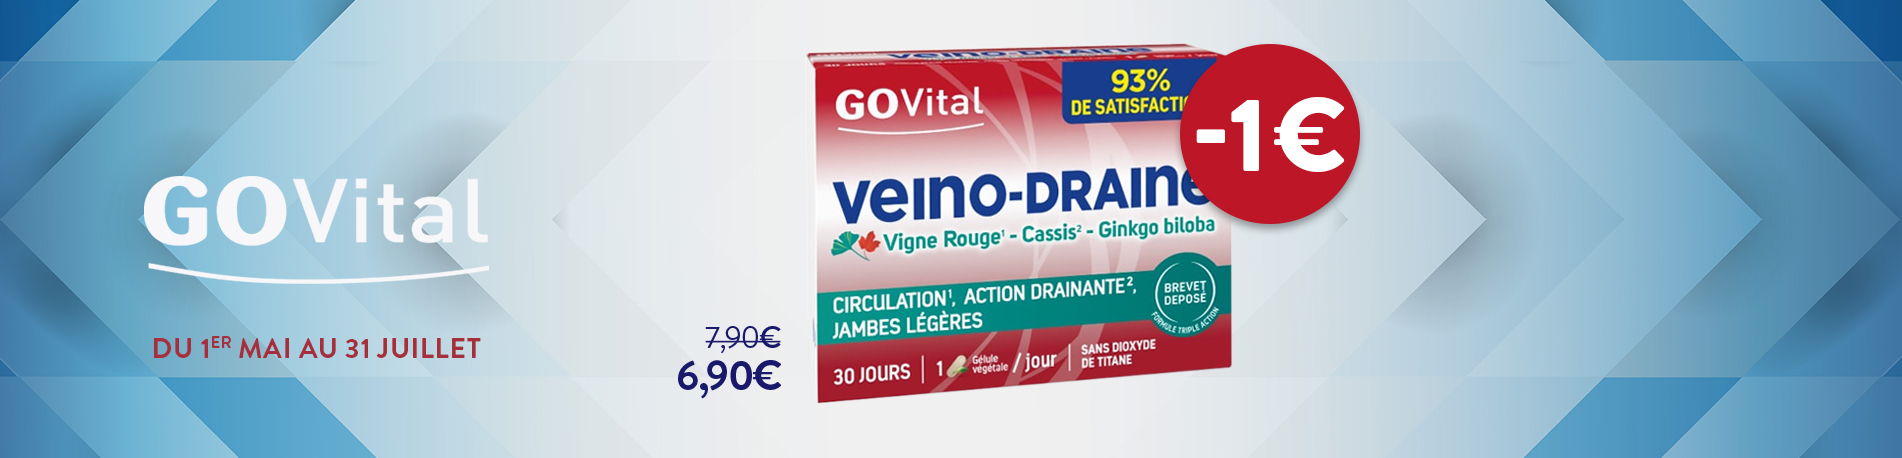 Promotion Govital Veinodraine